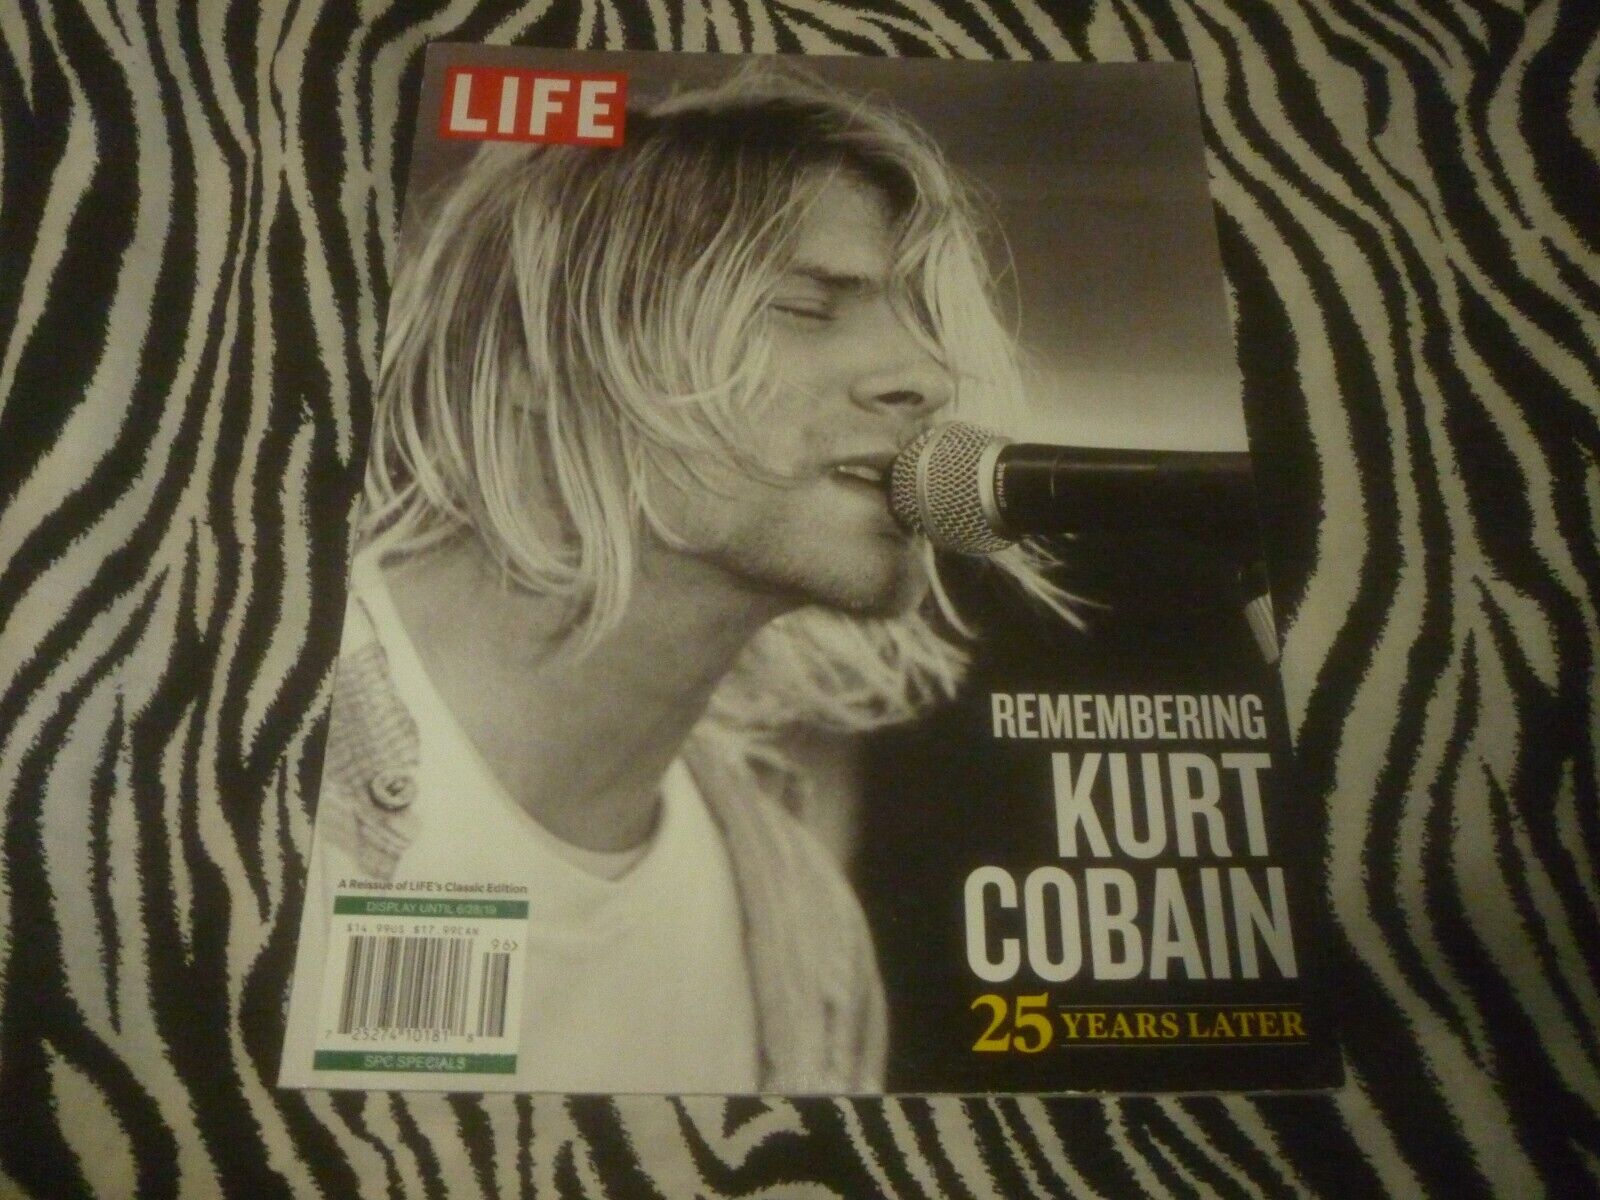 Life Magazine Remembering Kurk Cobain - Used Good Condition